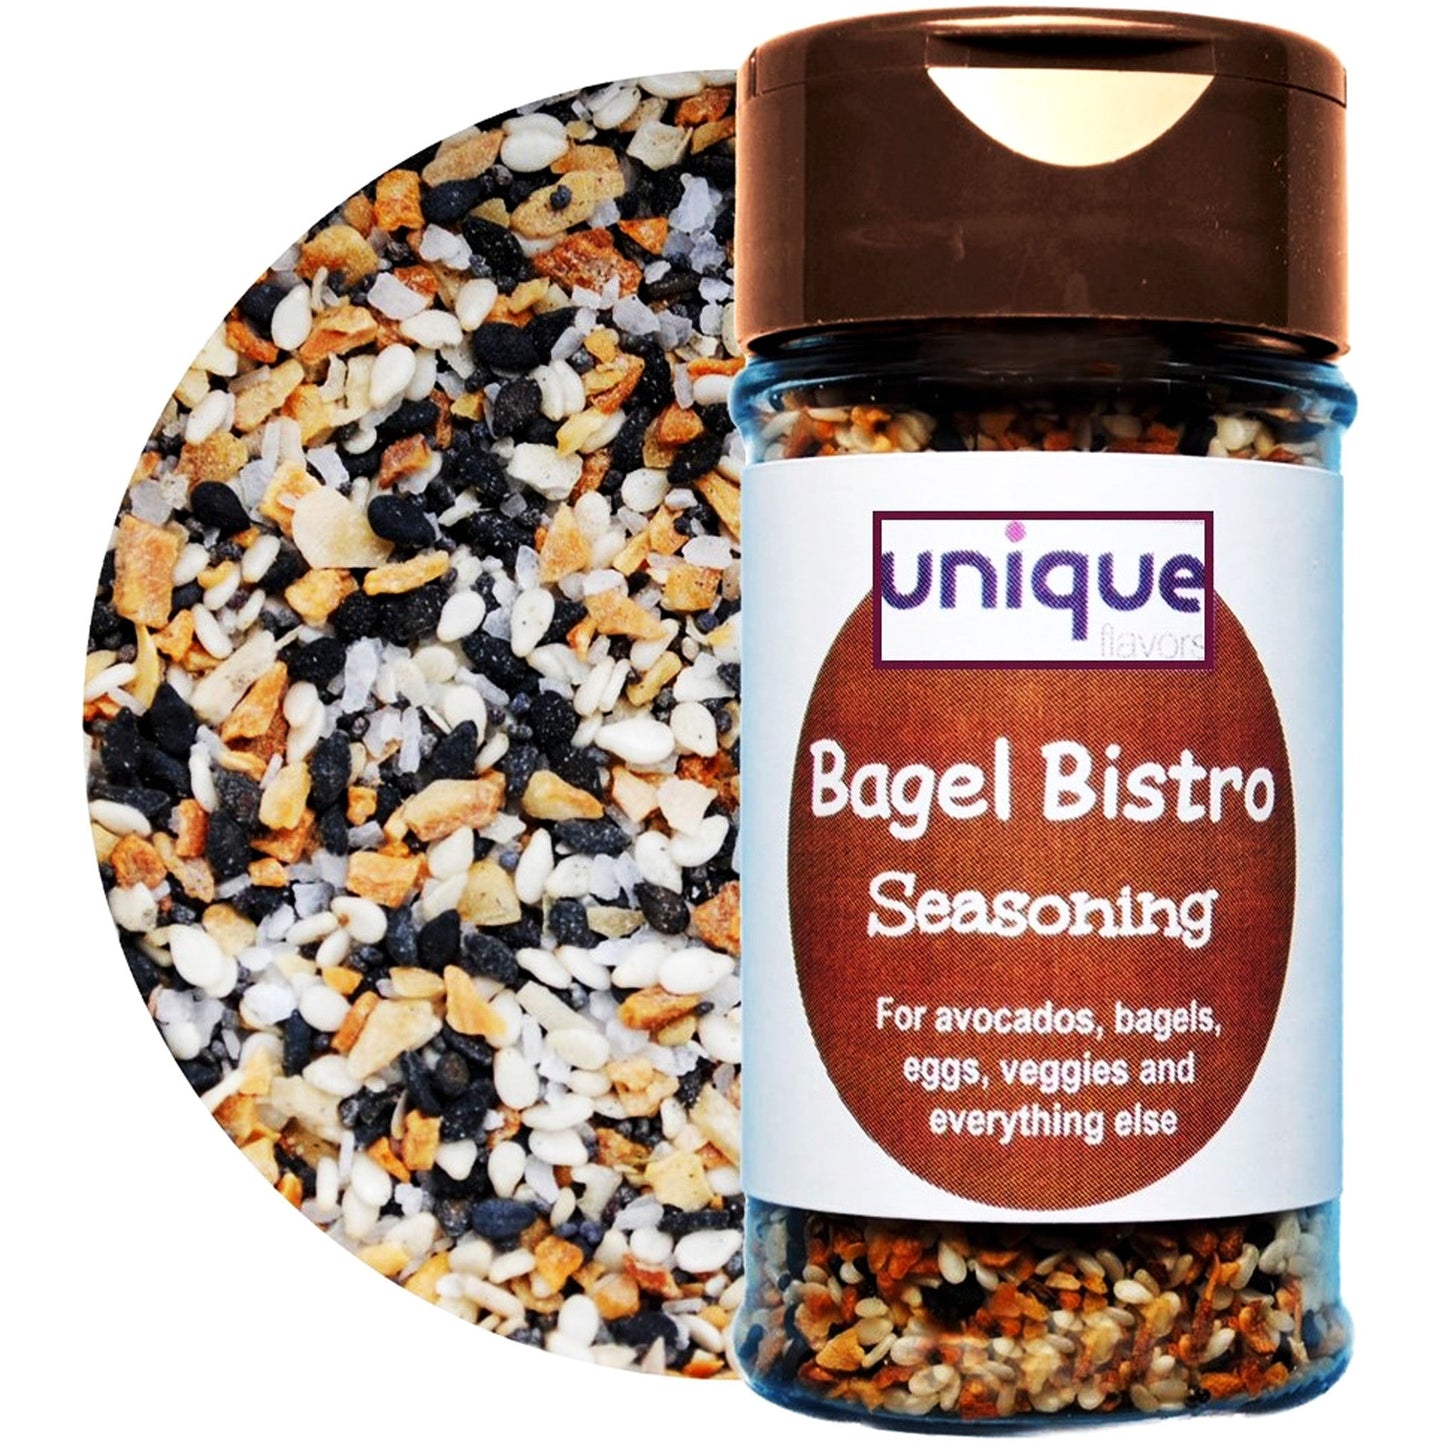 Everything Bagel Seasoning Bistro 1.5oz Easy Shaker - Unique Flavors Seasonings Unique Flavors LLC 